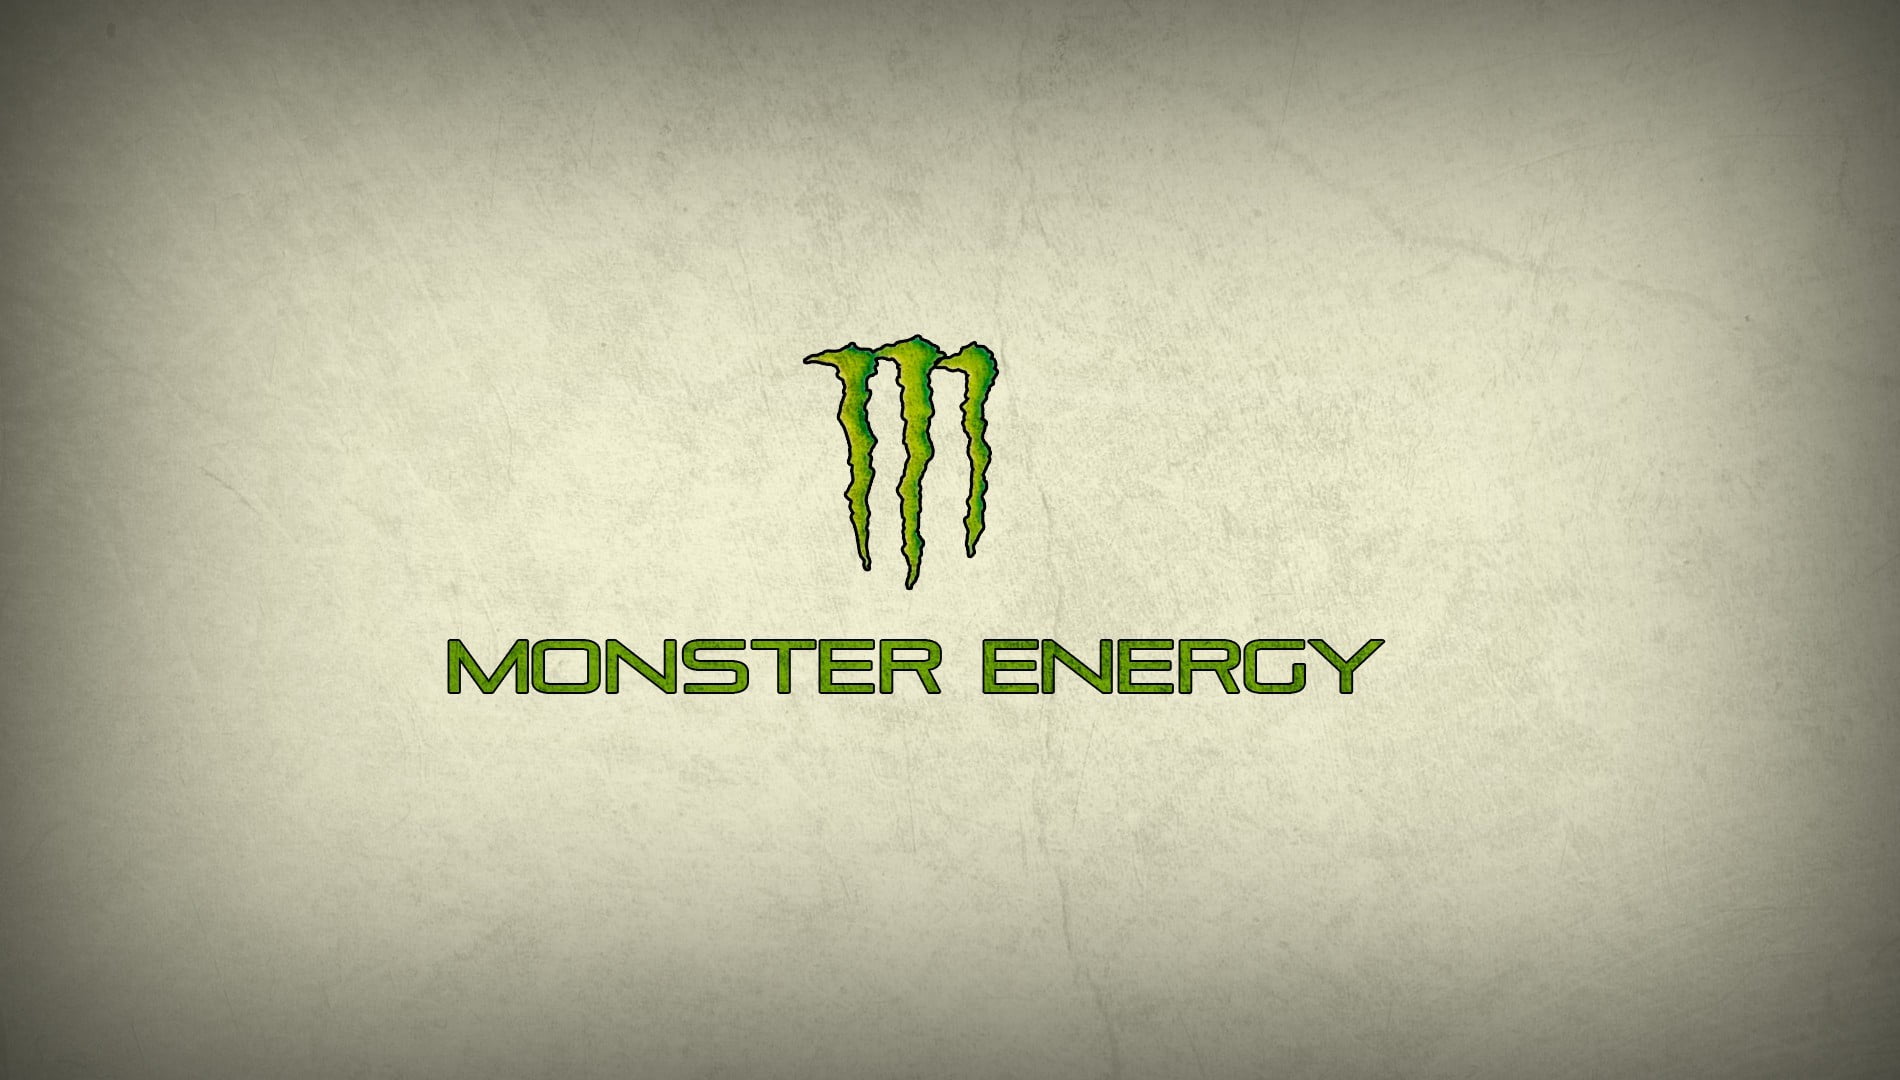 Monster Energy logo, text, vignette, western script, green color